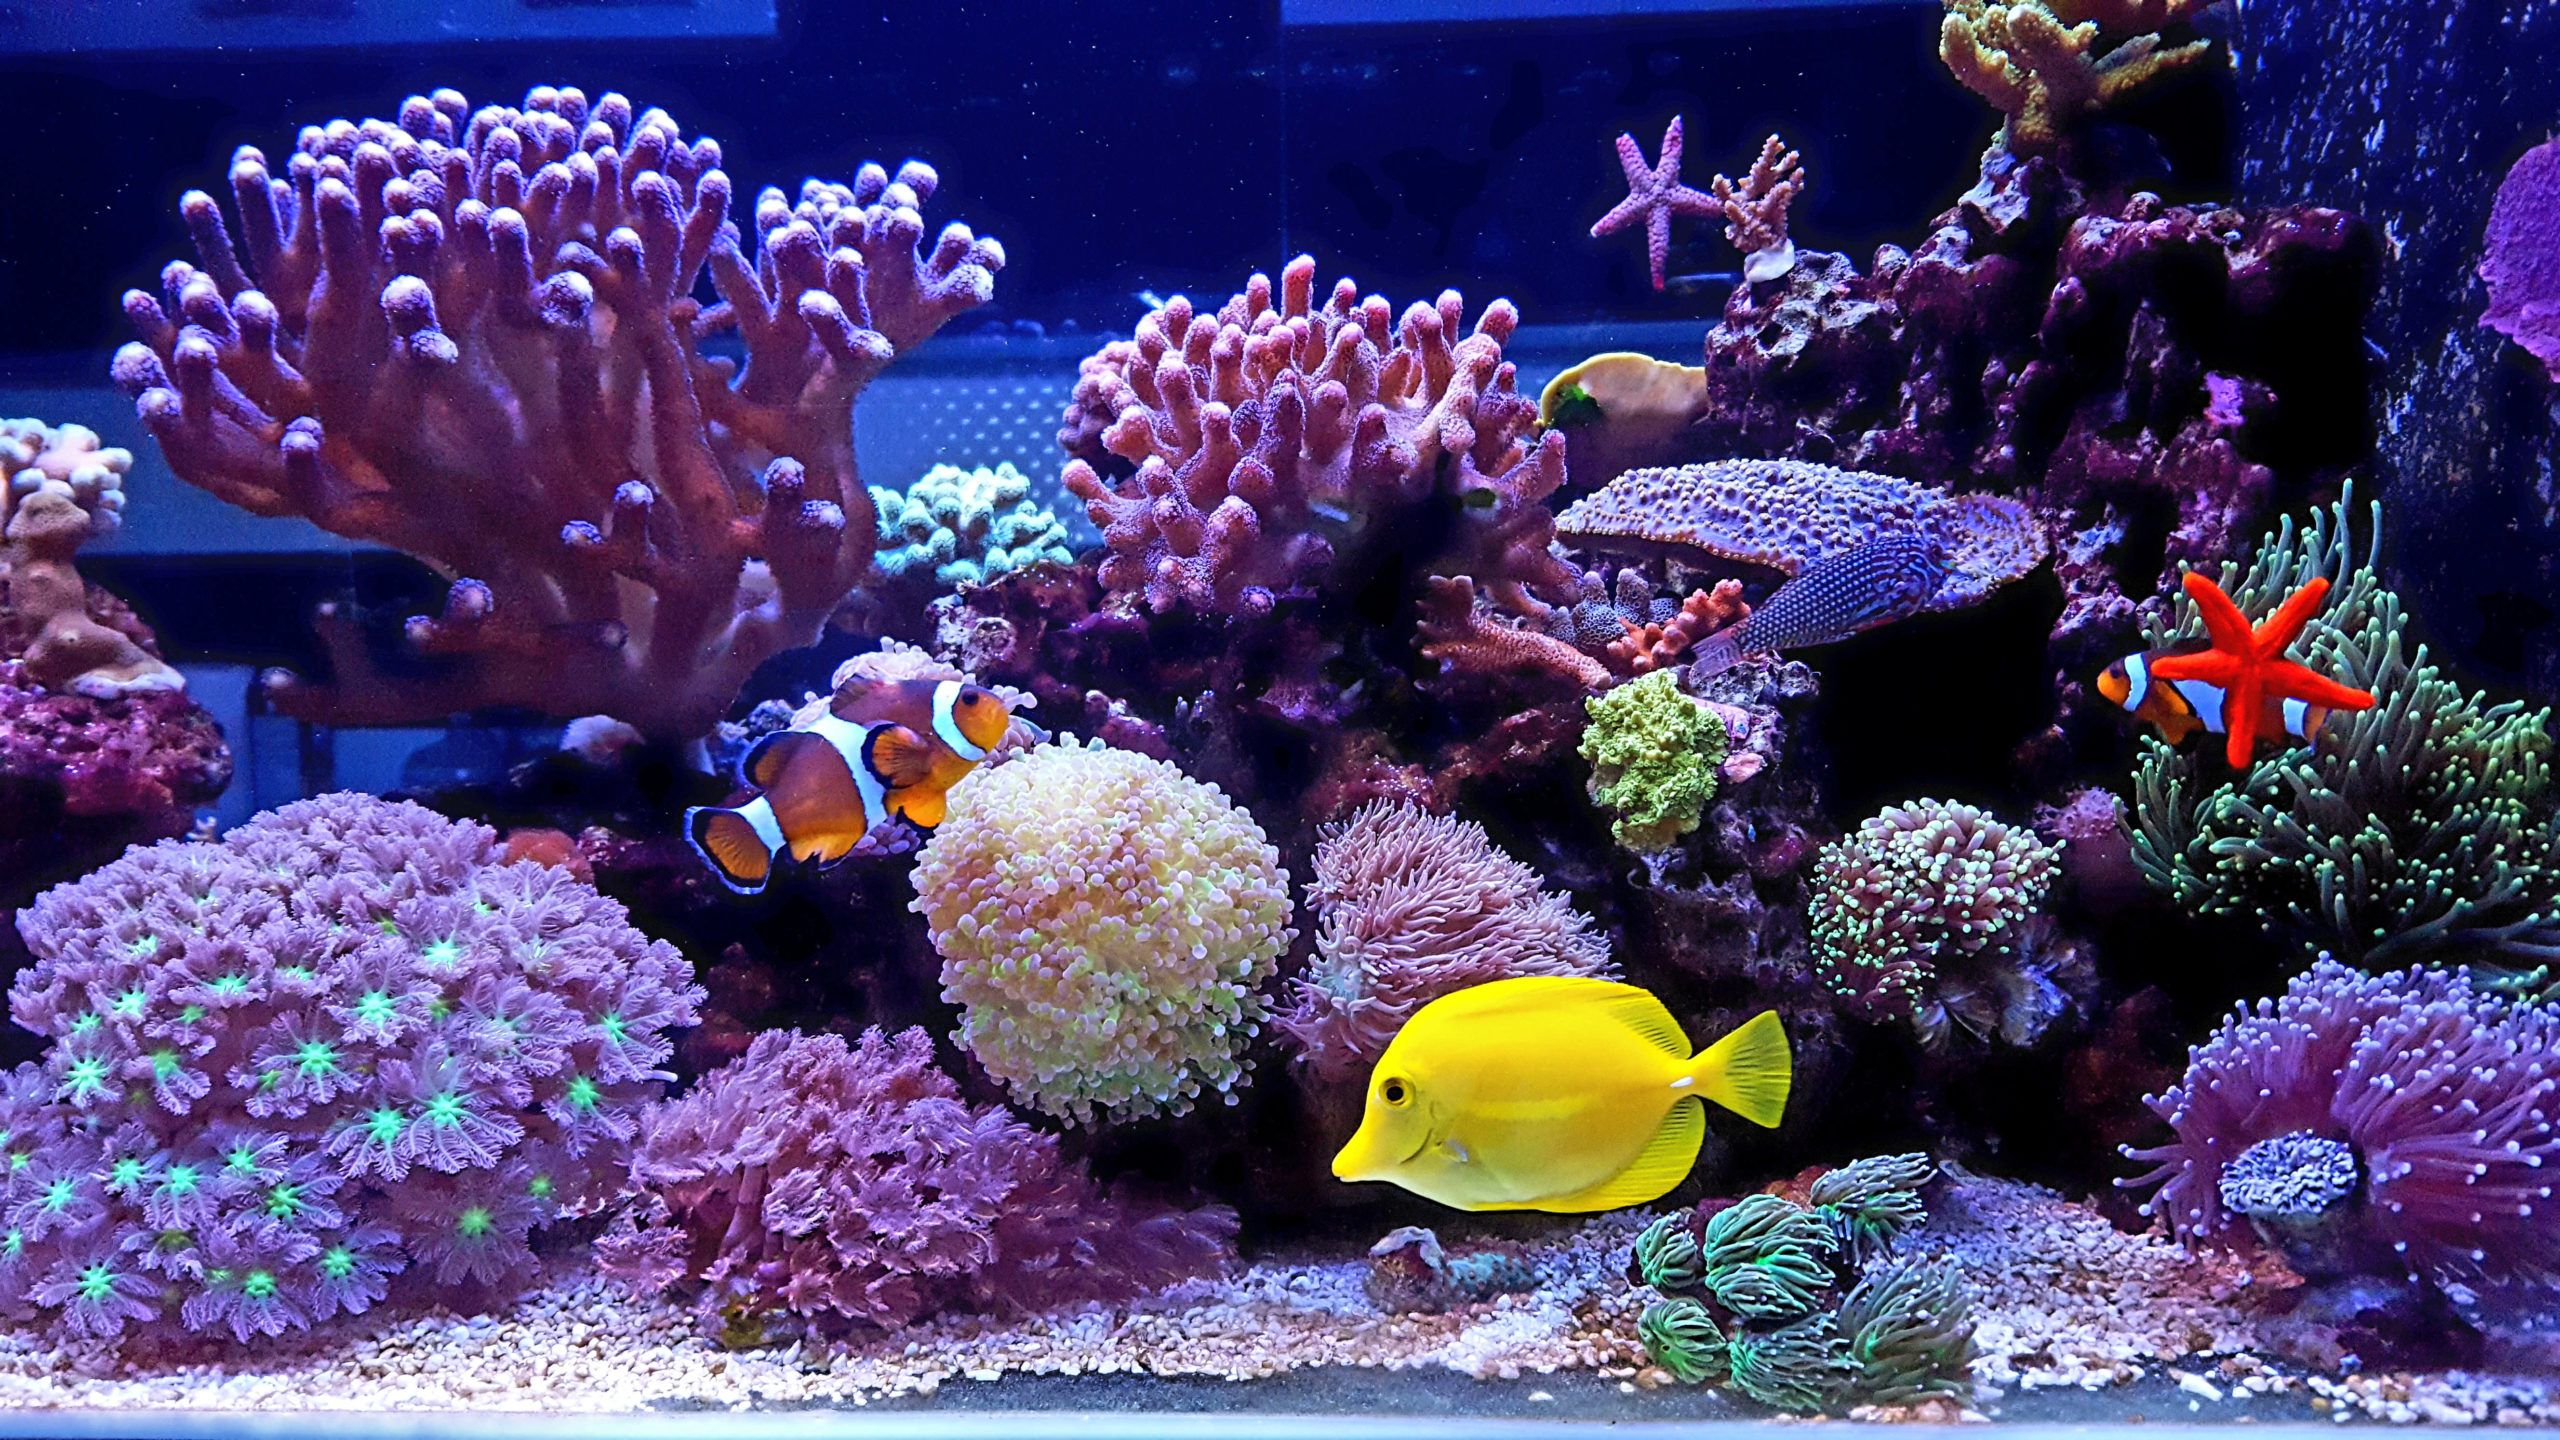 Filtre aquarium : choisir les meilleures masses filtrantes - Guide